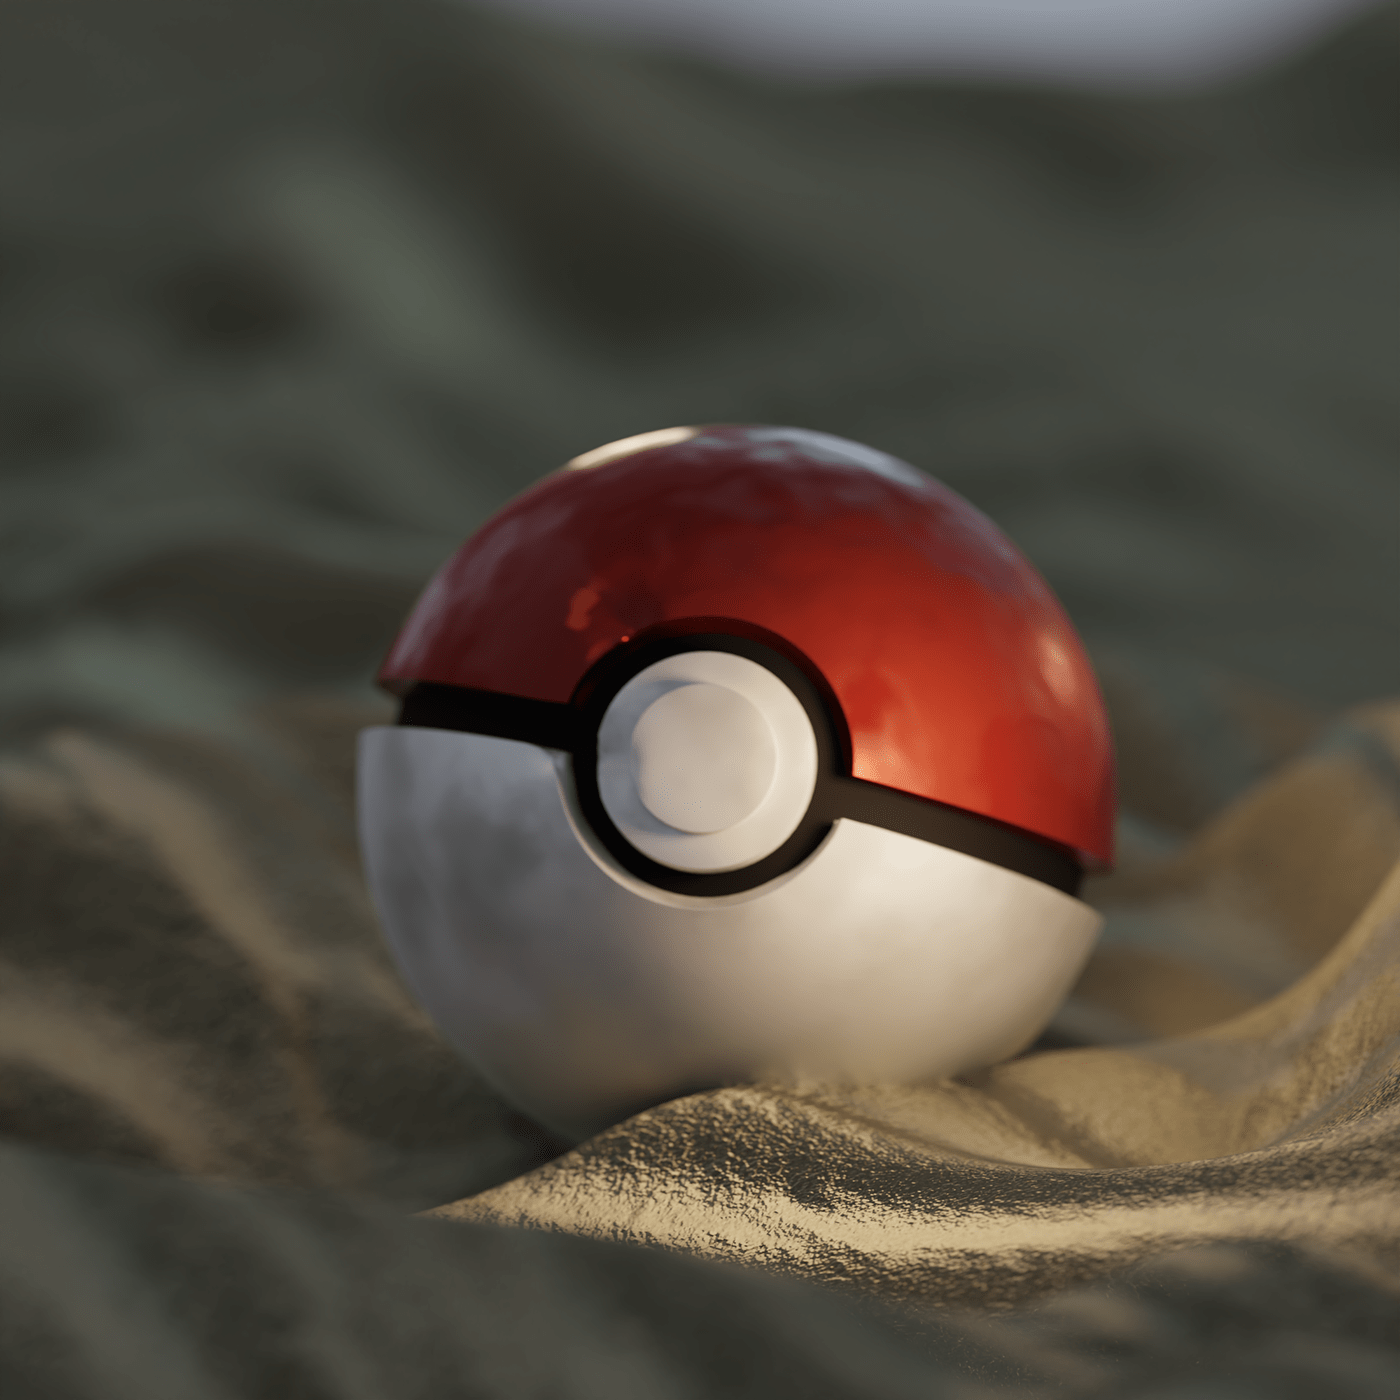 3D Render blender cycles visualization modeling sand pokeball